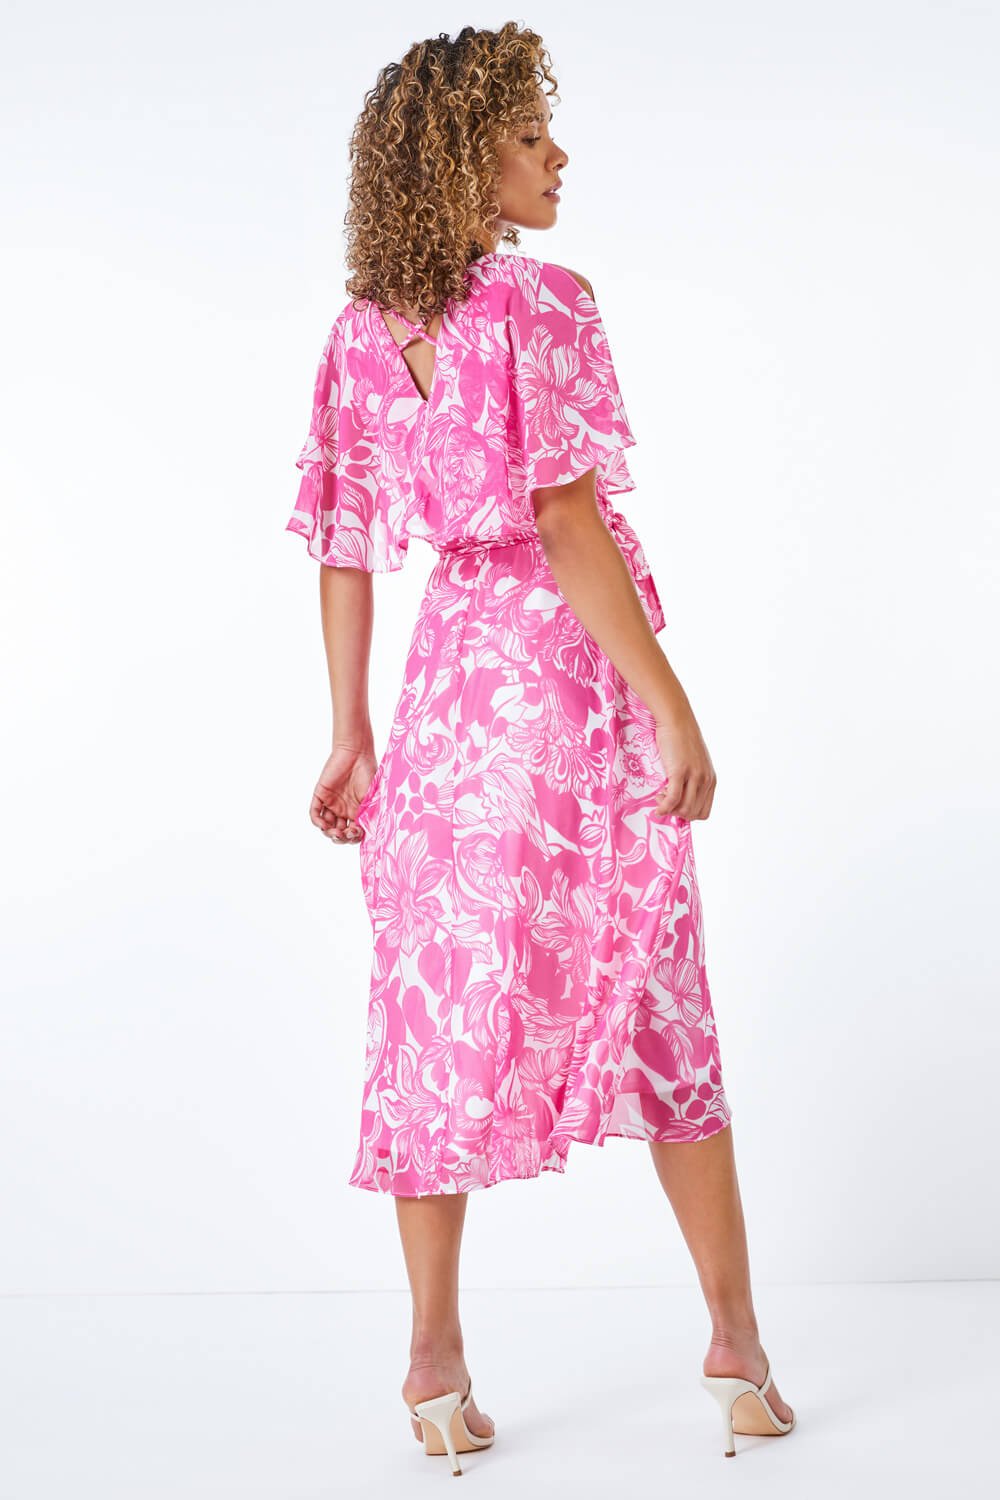 PINK Petite Floral Print Chiffon Cape Midi Dress, Image 3 of 5